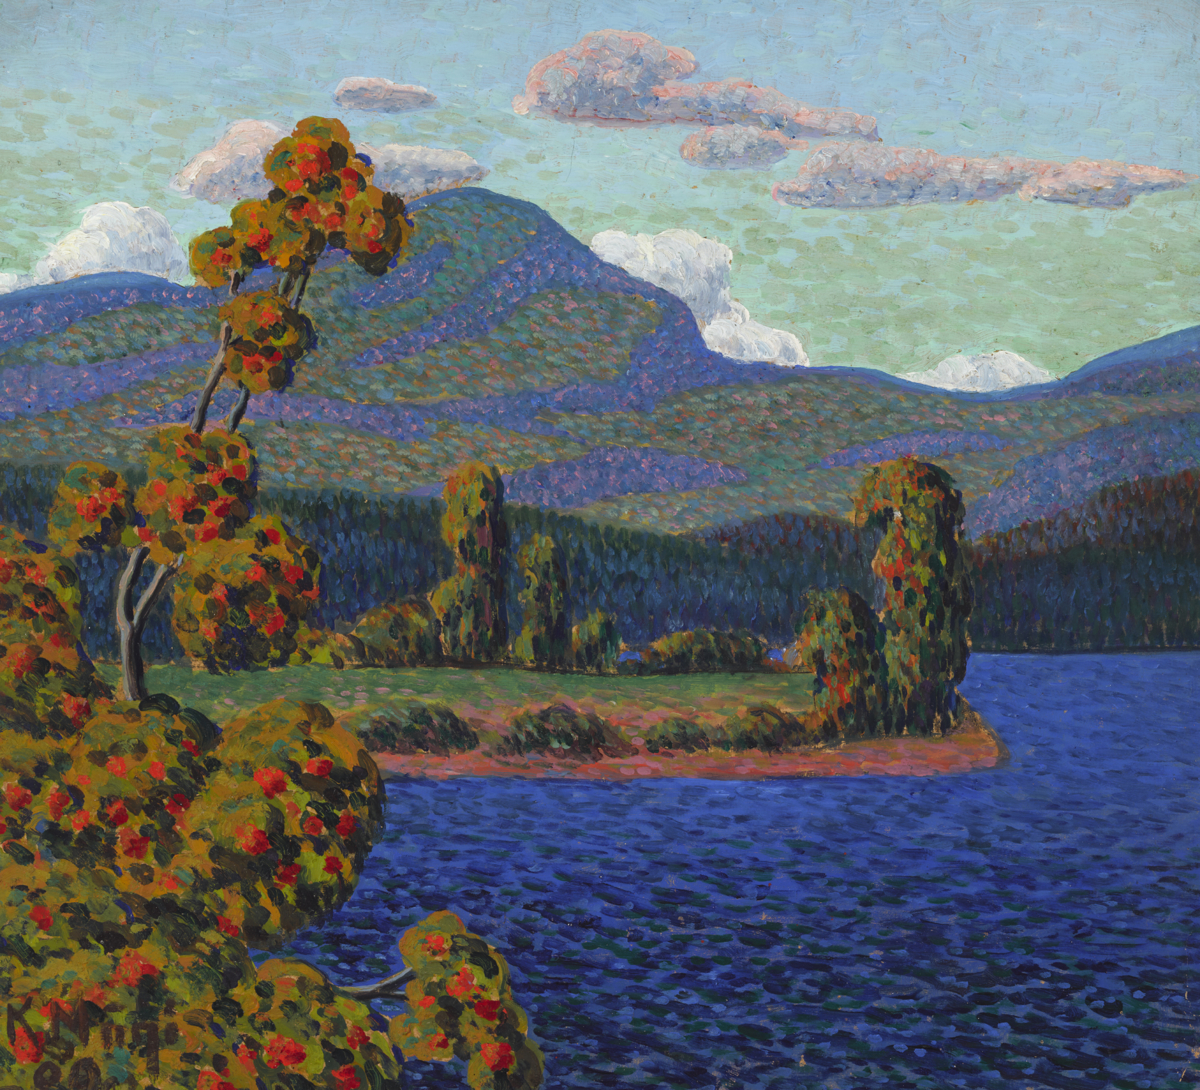 Konrad M&auml;gi, Norwegian Landscape, 1909, Art Museum of Estonia.

